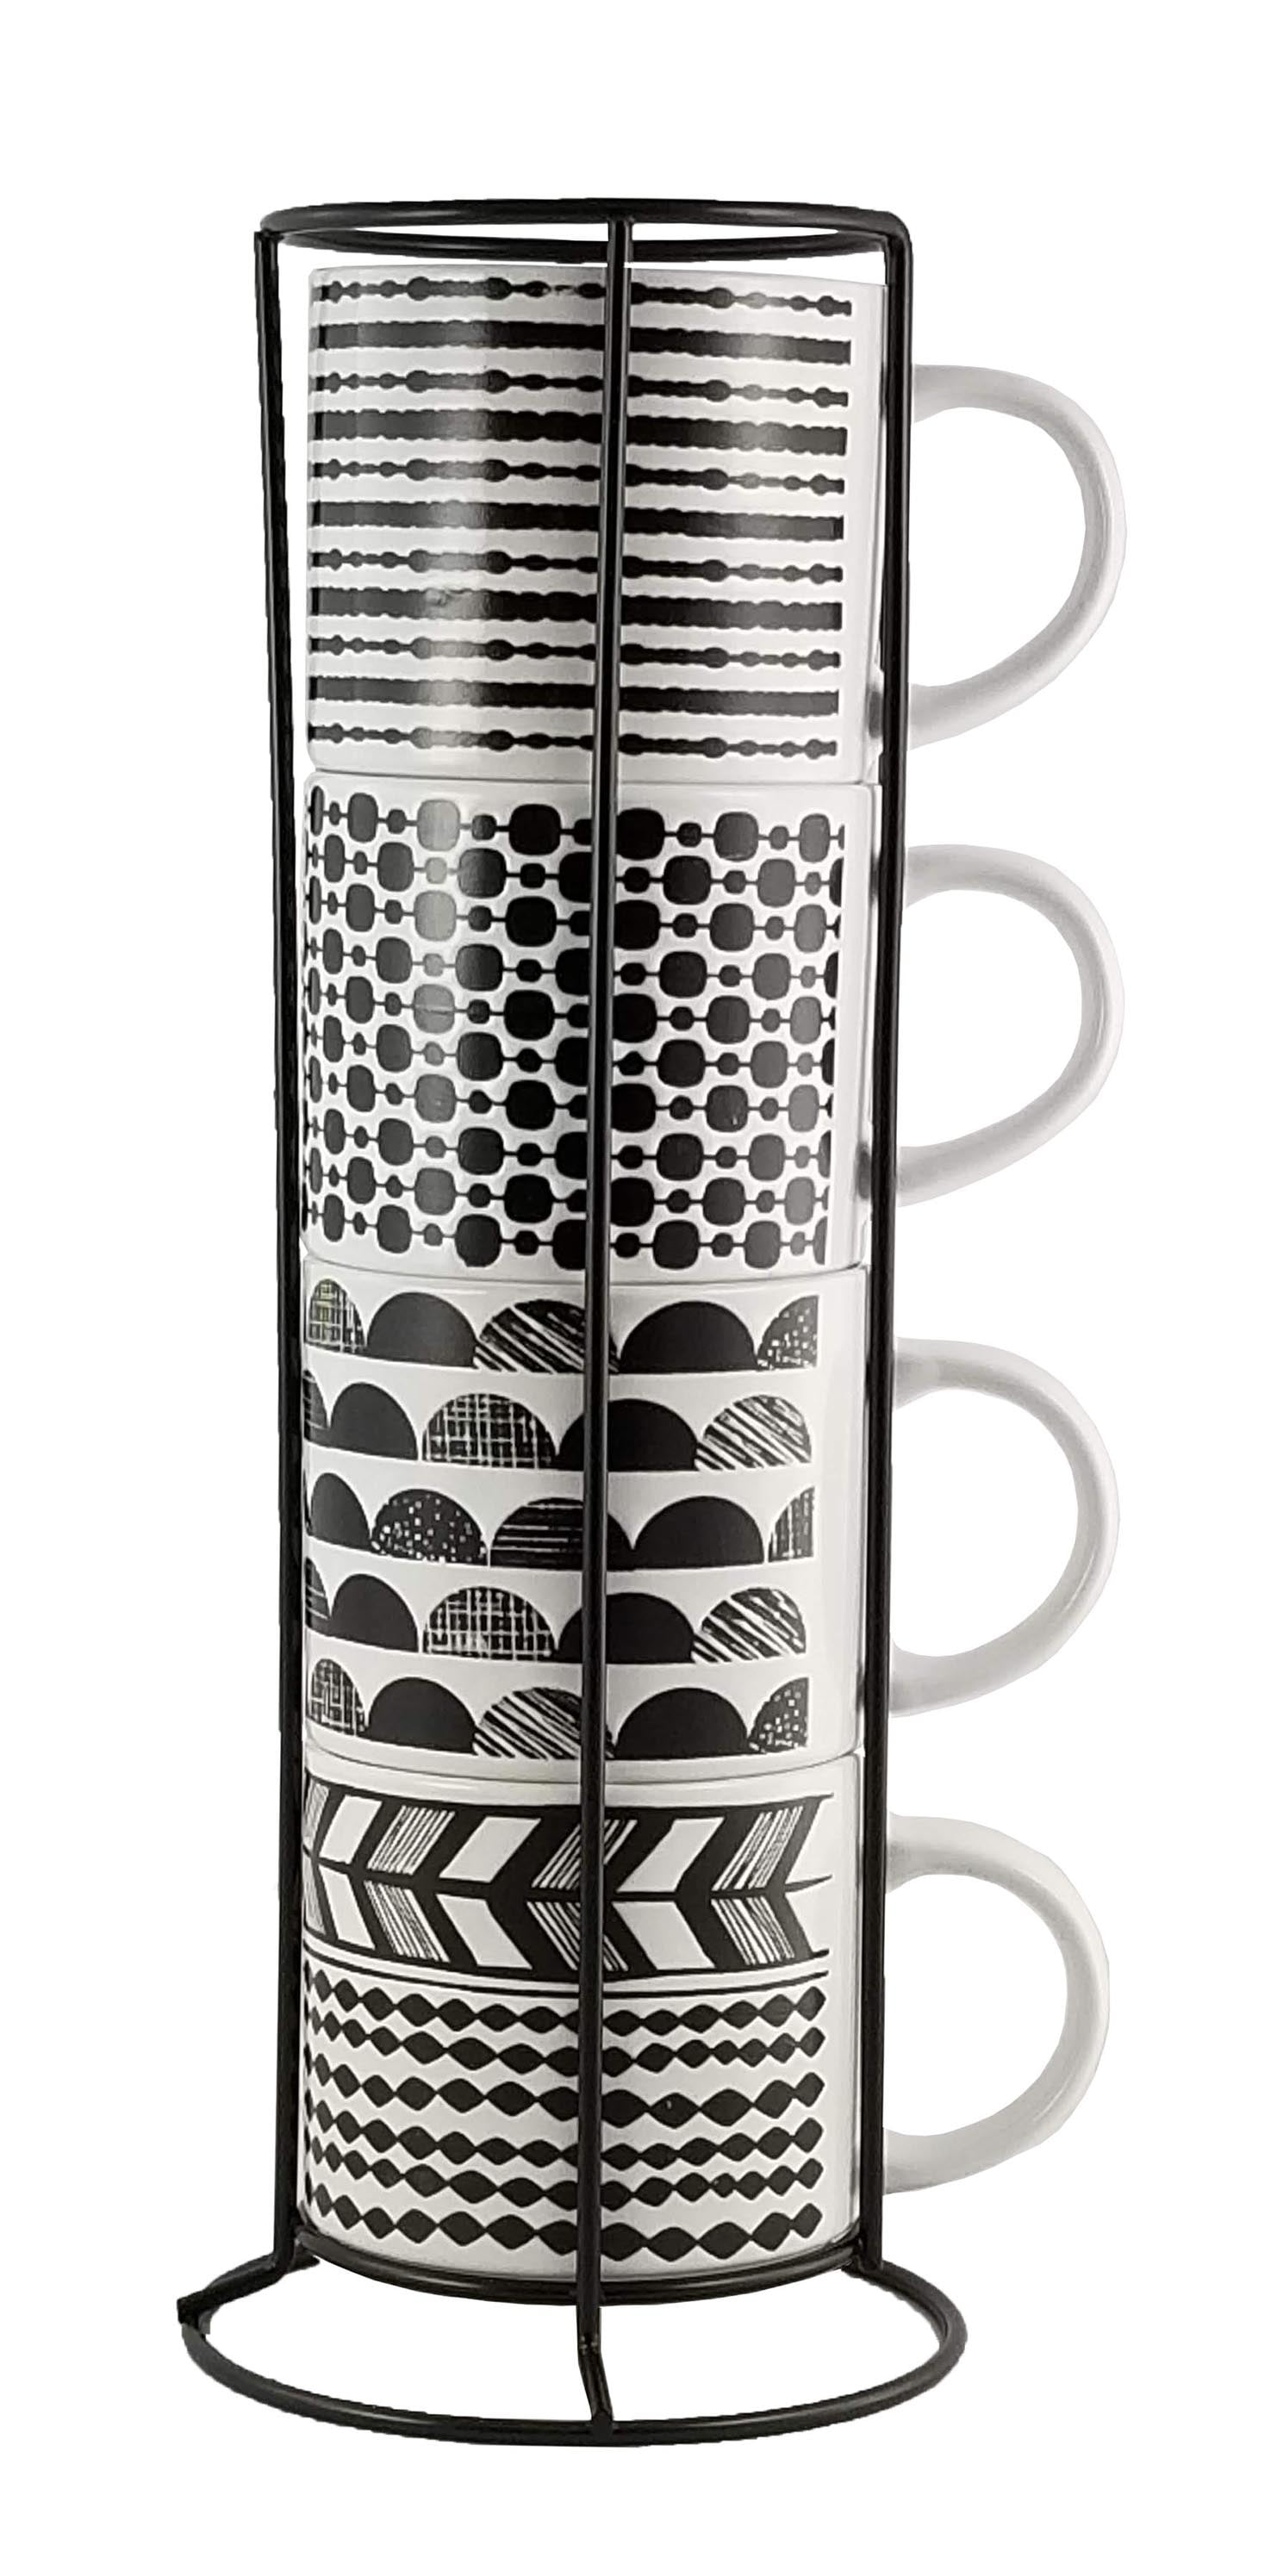 Set of 2 Stackable Coffee Mugs